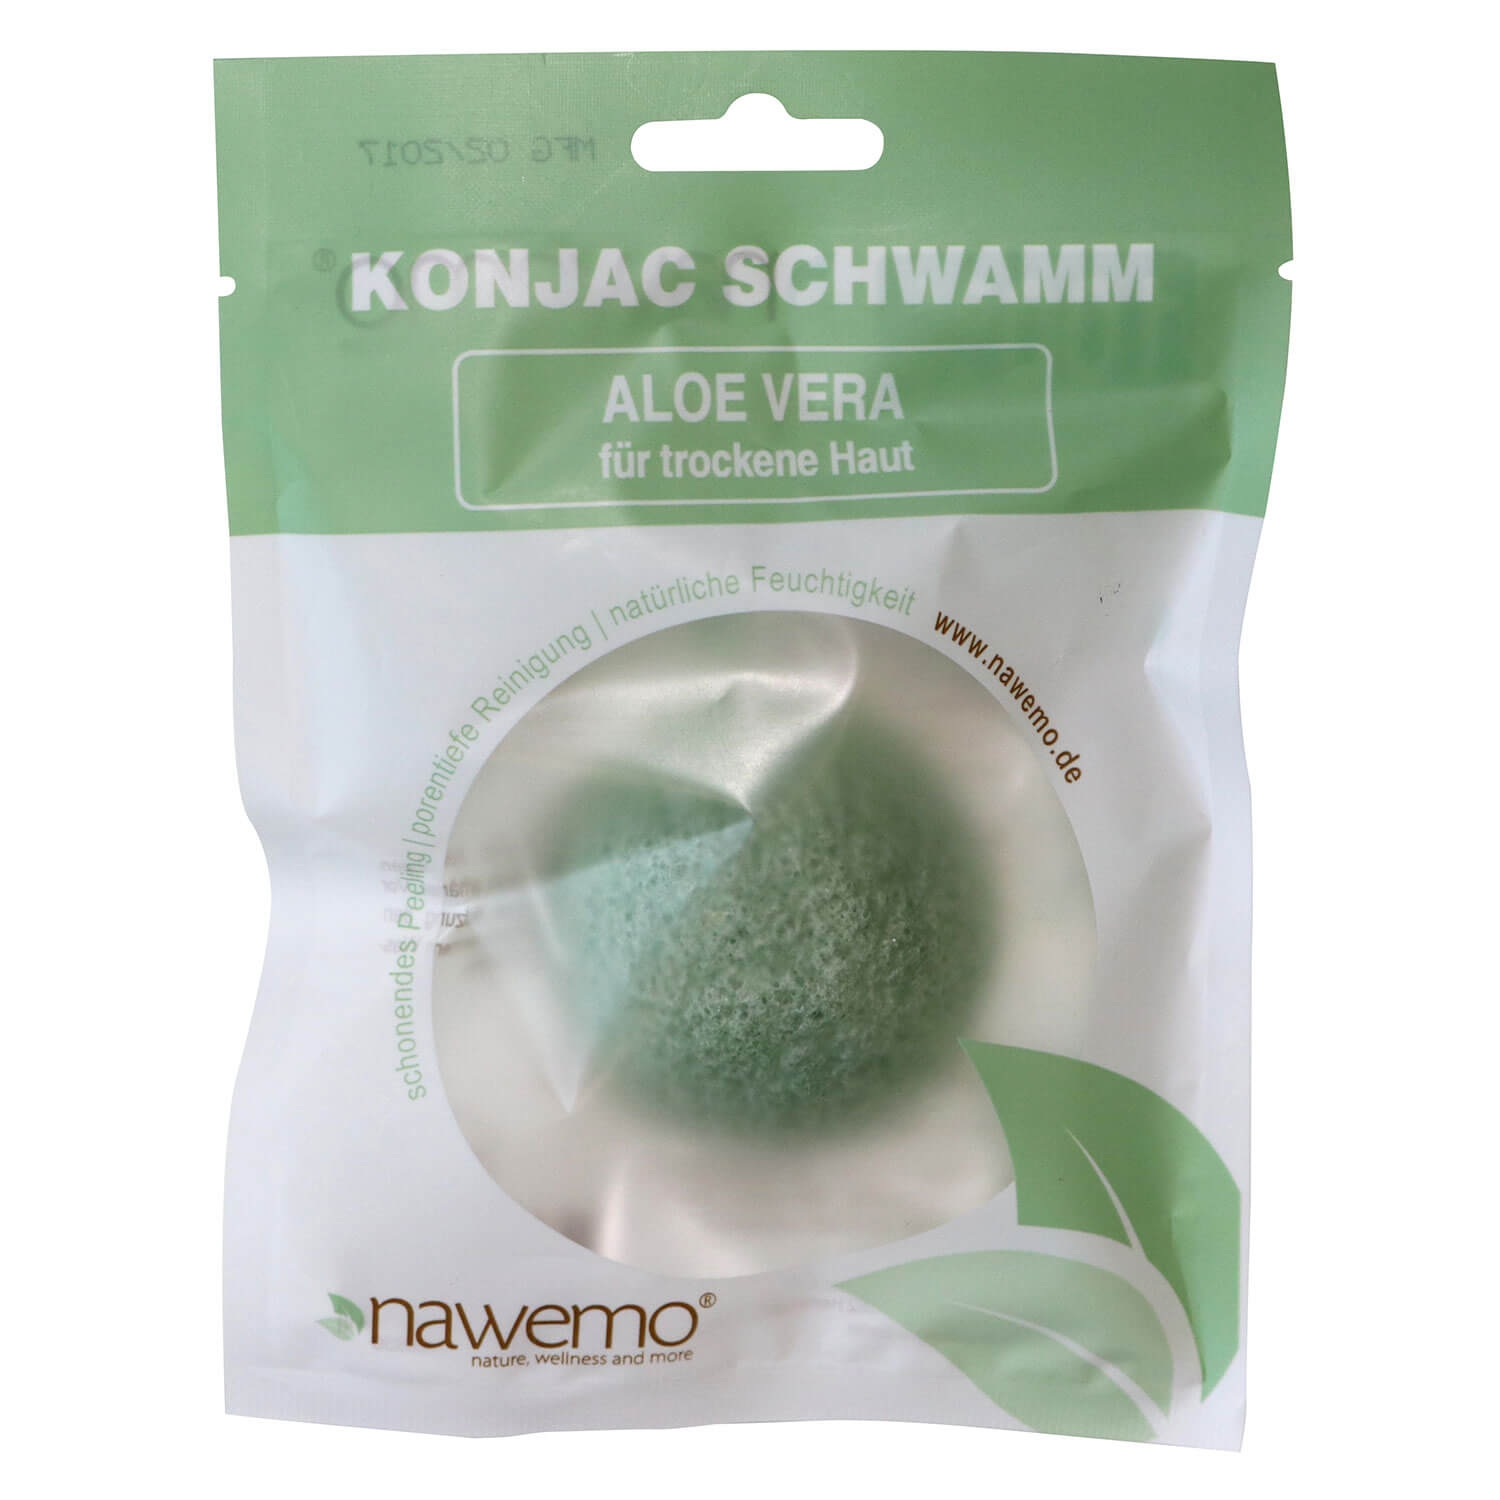 Product image from nawemo - Konjac Schwamm ALOE VERA